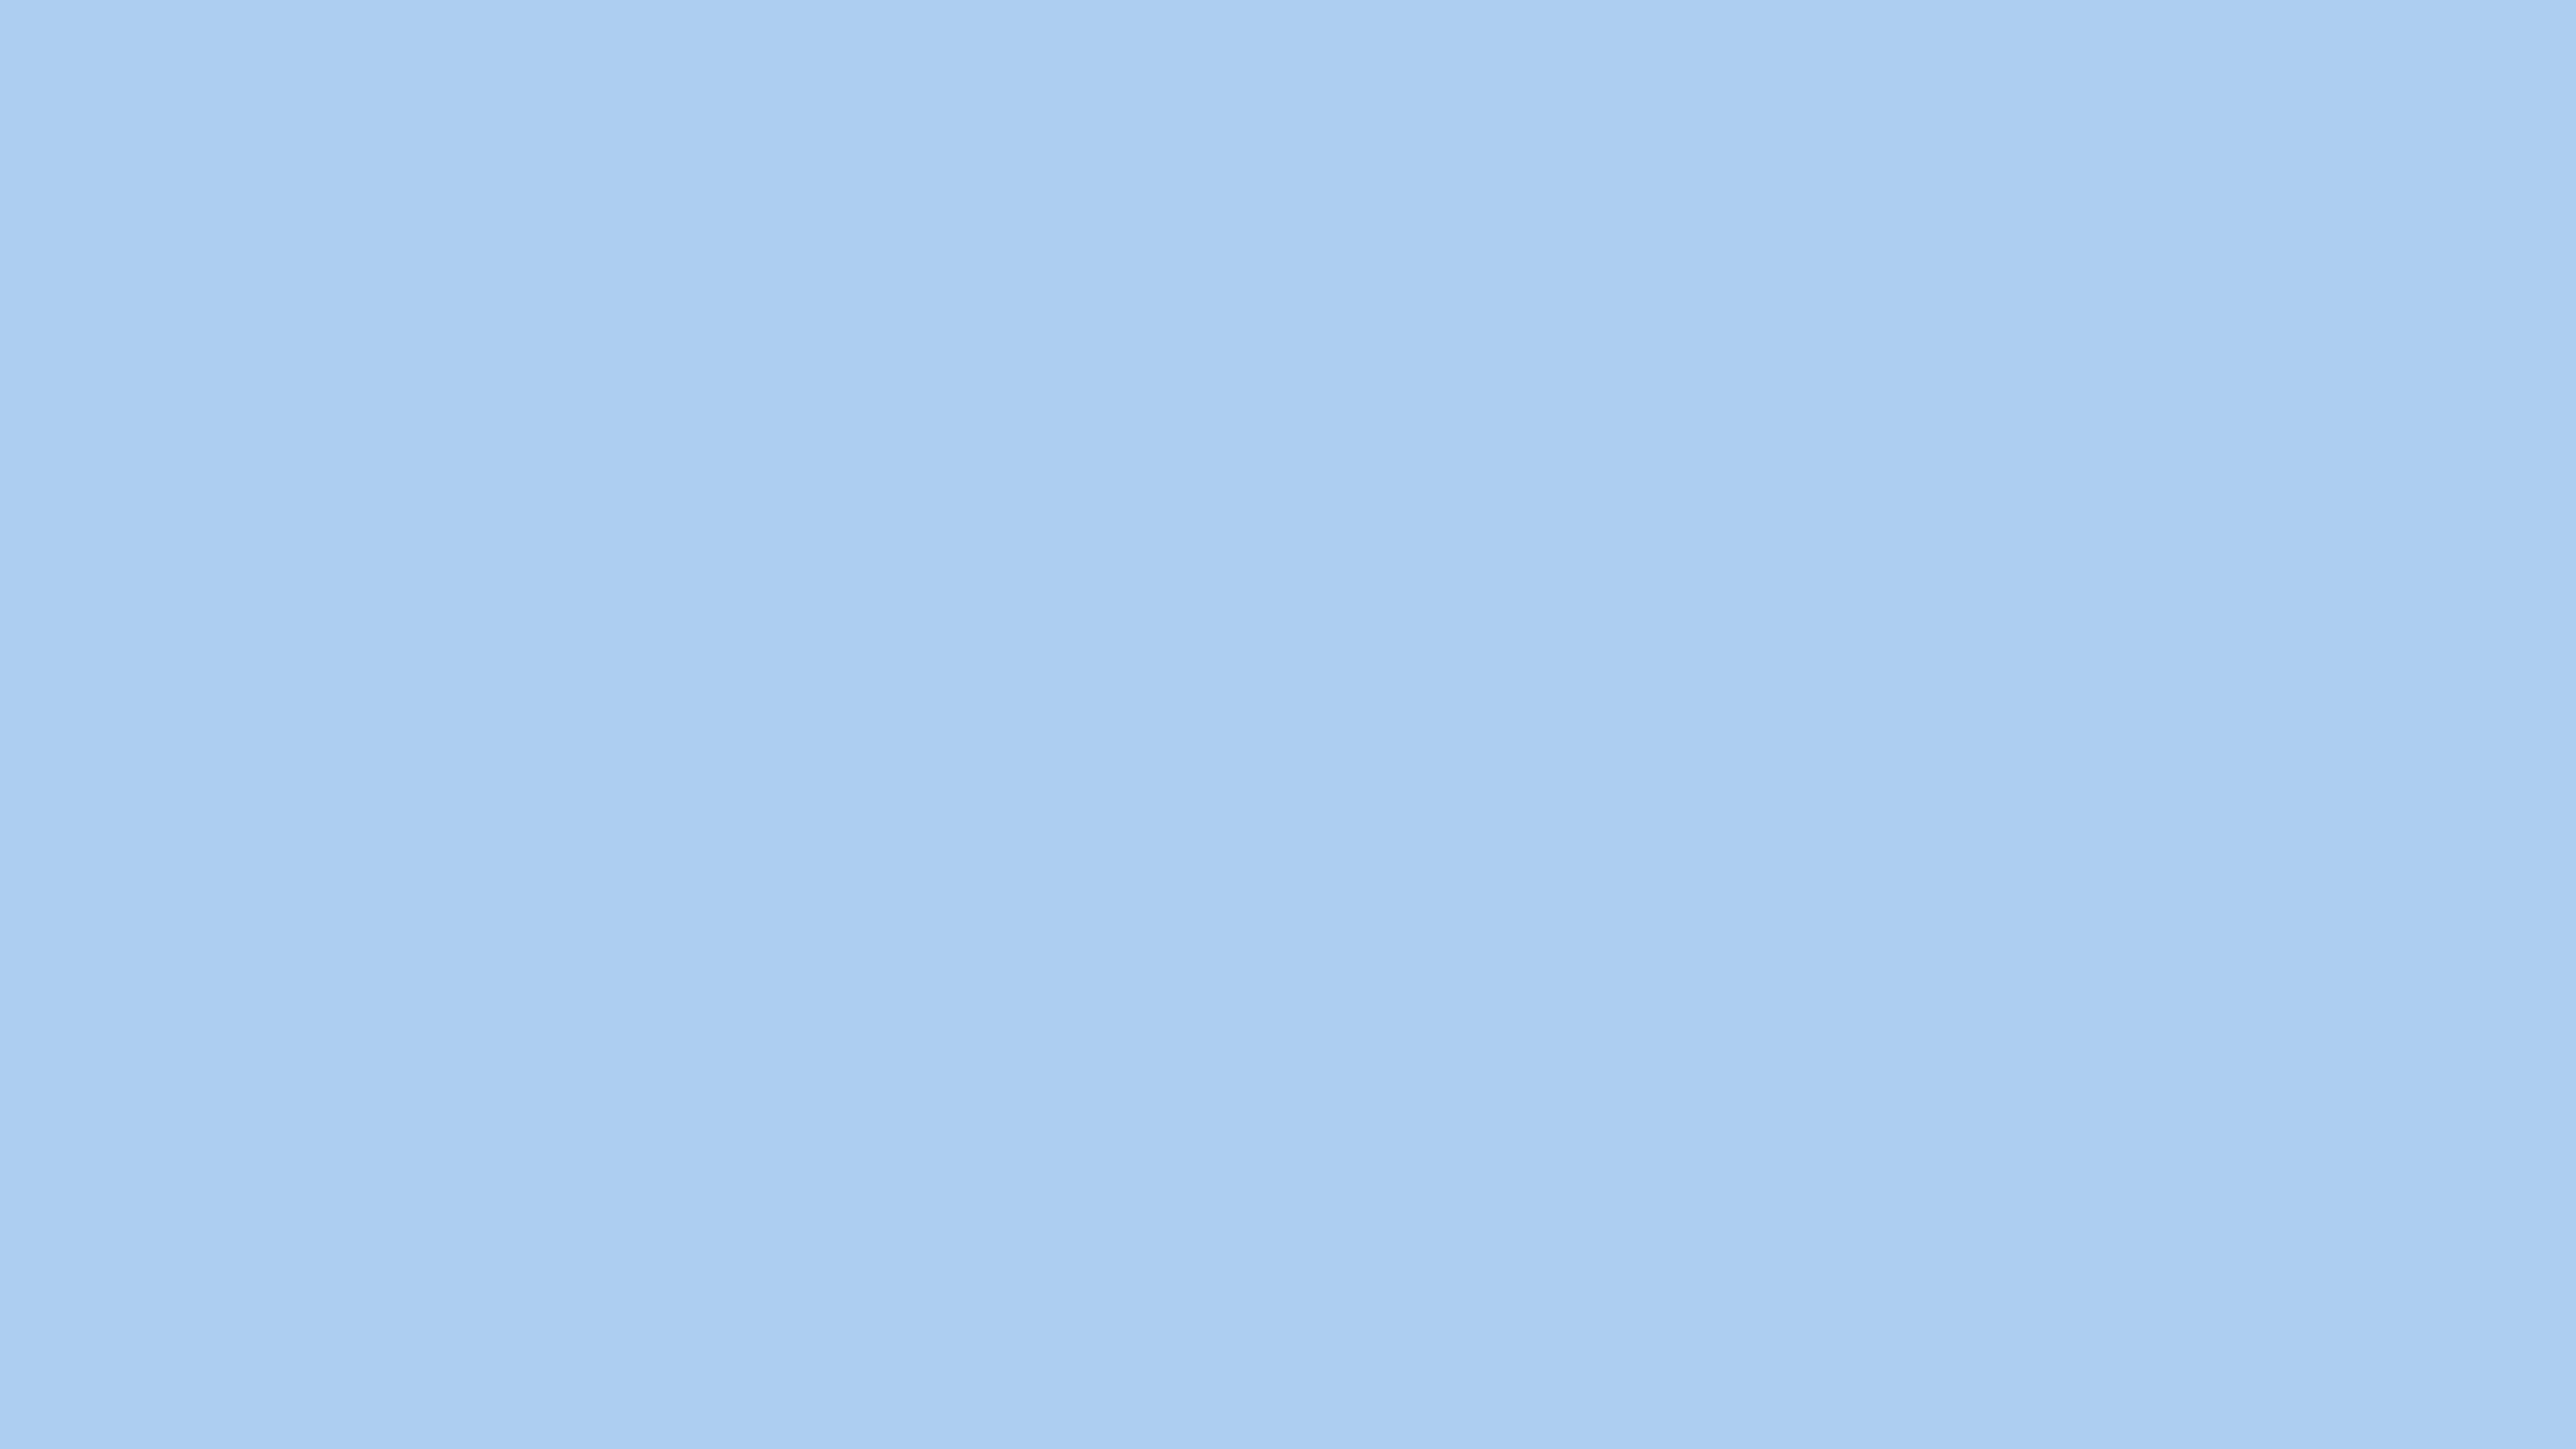 7680x4320 Pale Cornflower Blue Solid Color Background